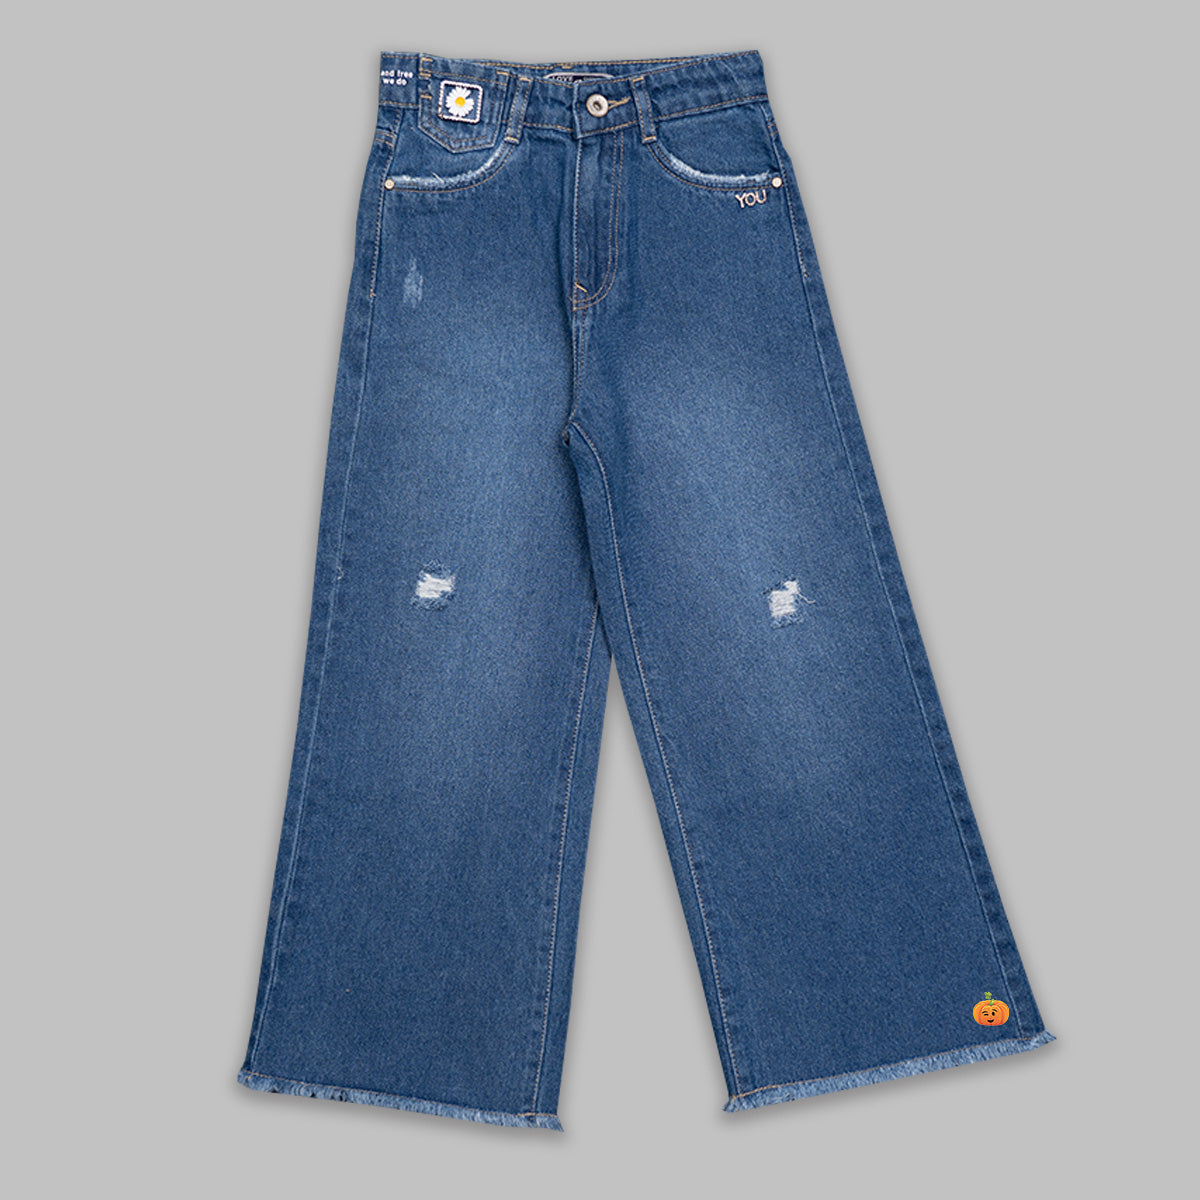 Jeans & Trousers | Denim Damage Jeans | Freeup